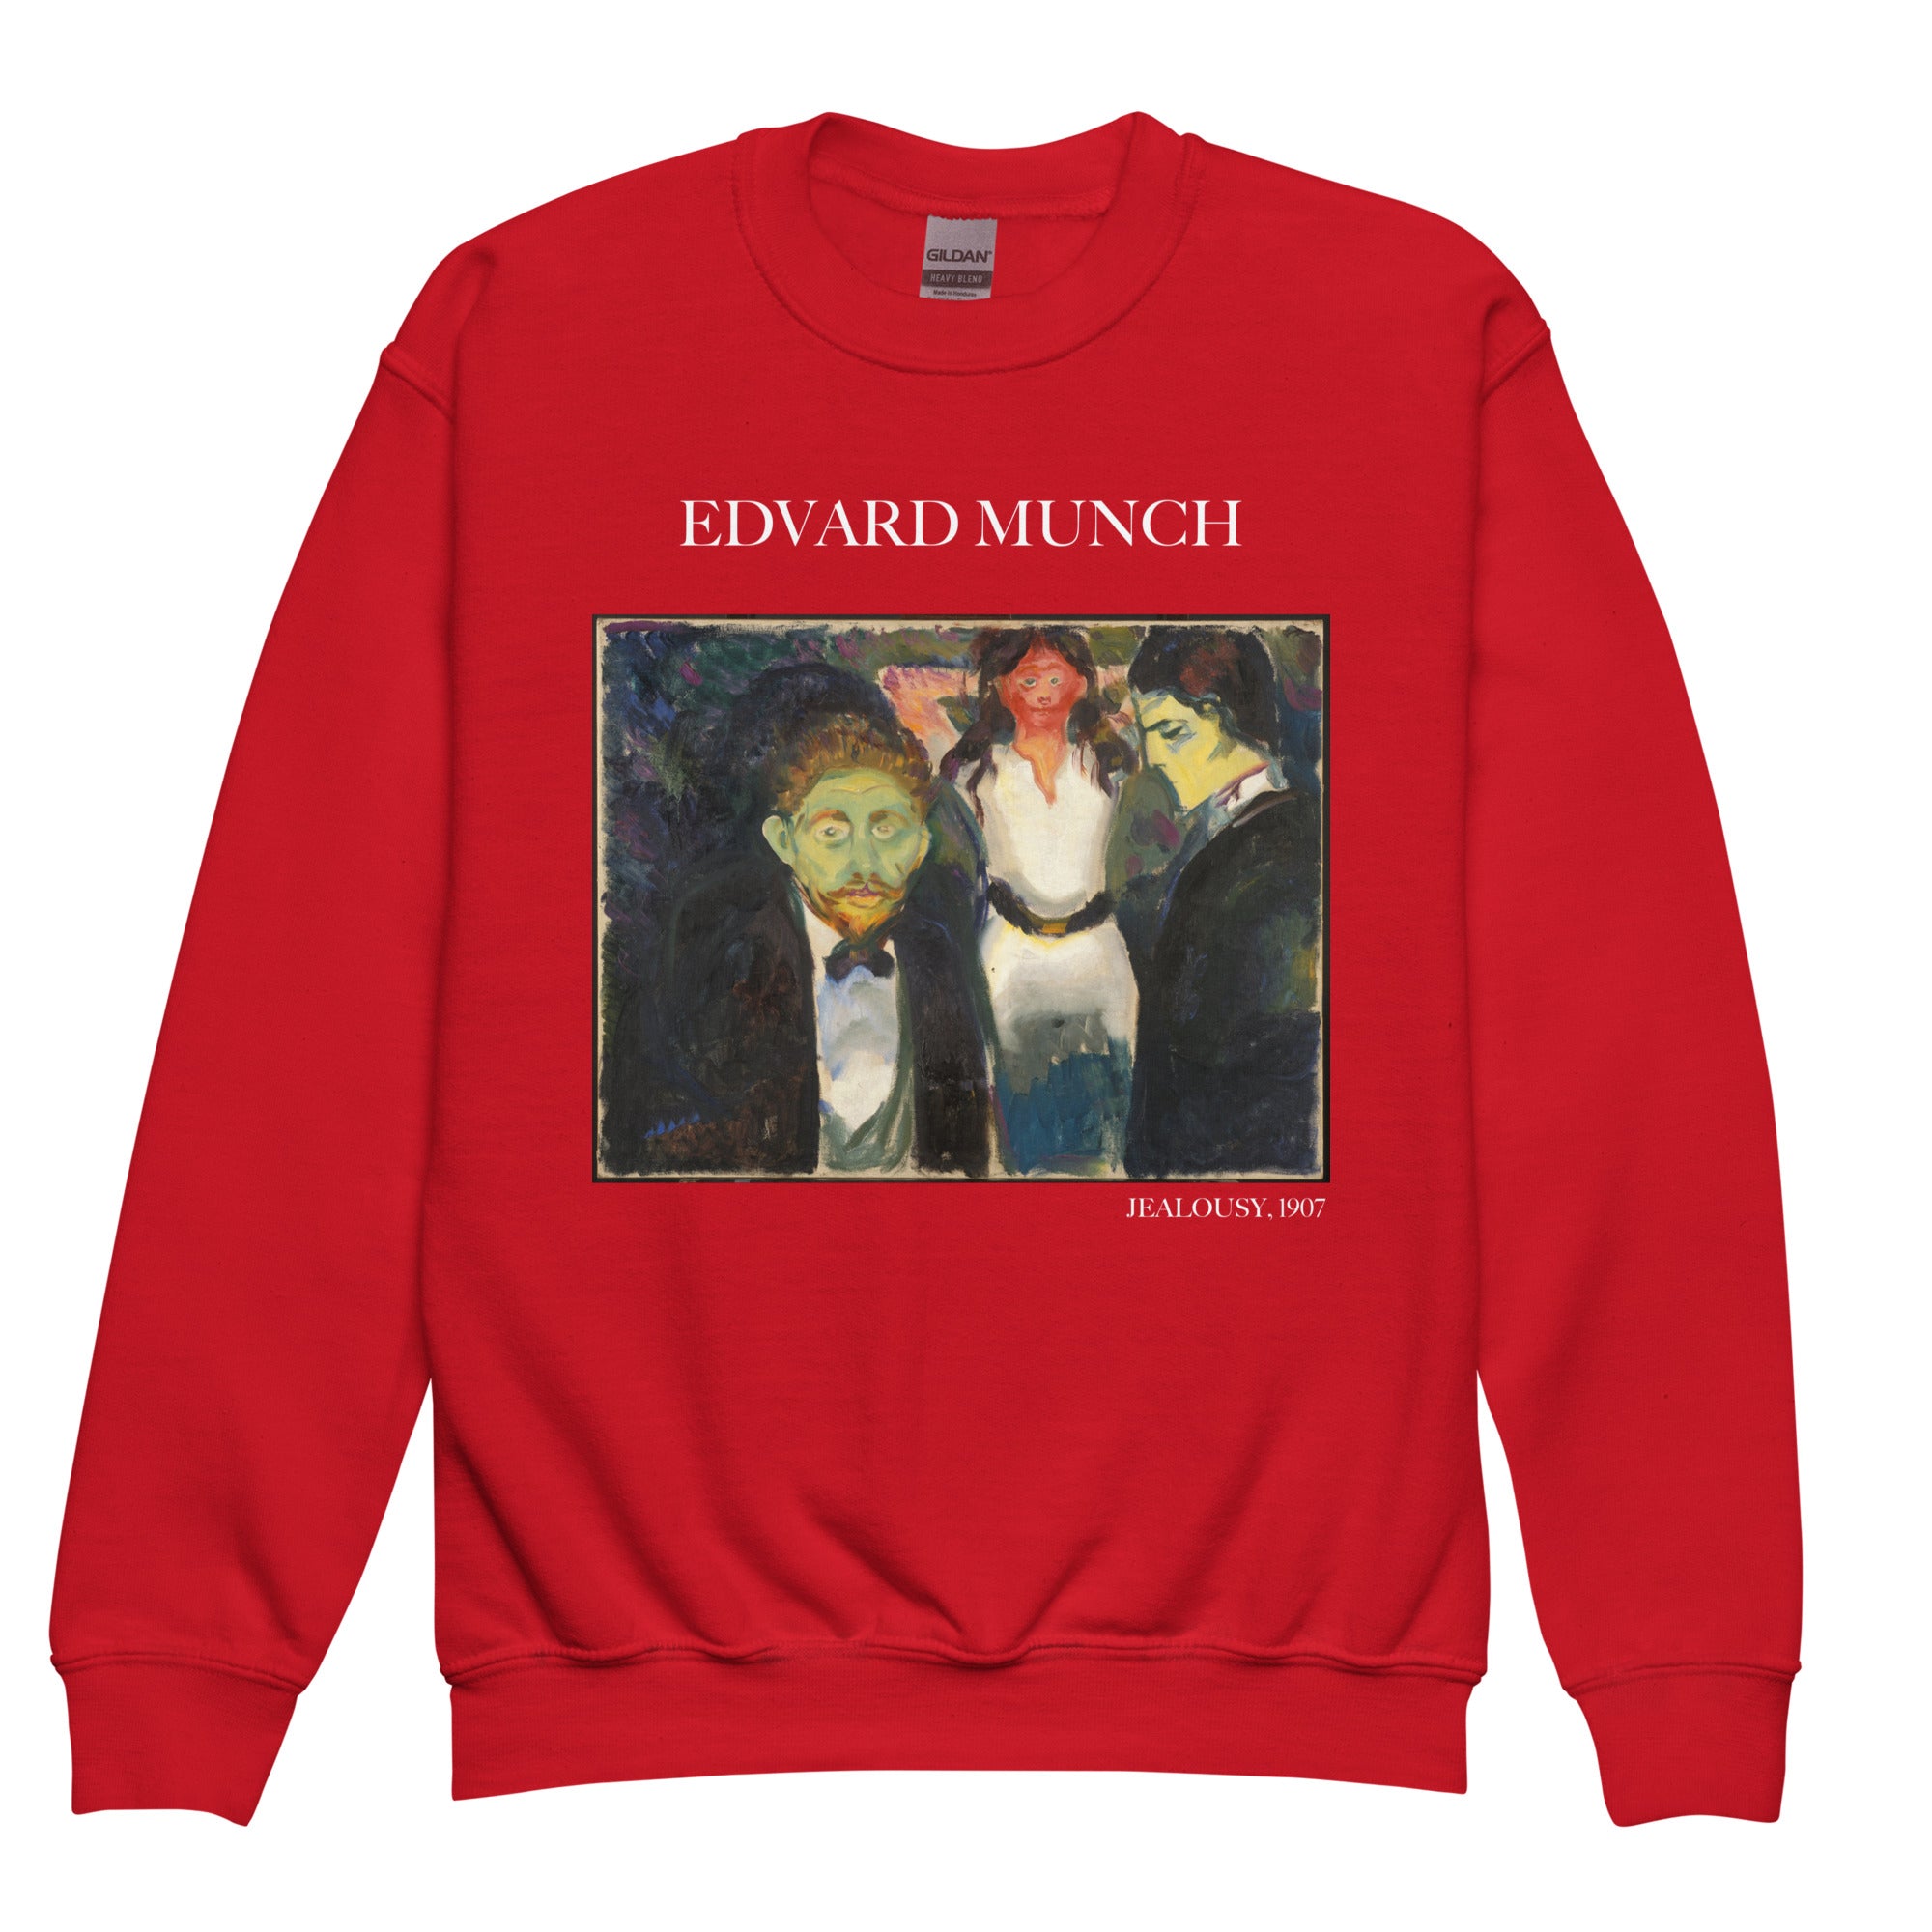 Edvard Munch 'Jealousy' Famous Painting Crewneck Sweatshirt | Premium Youth Art Sweatshirt